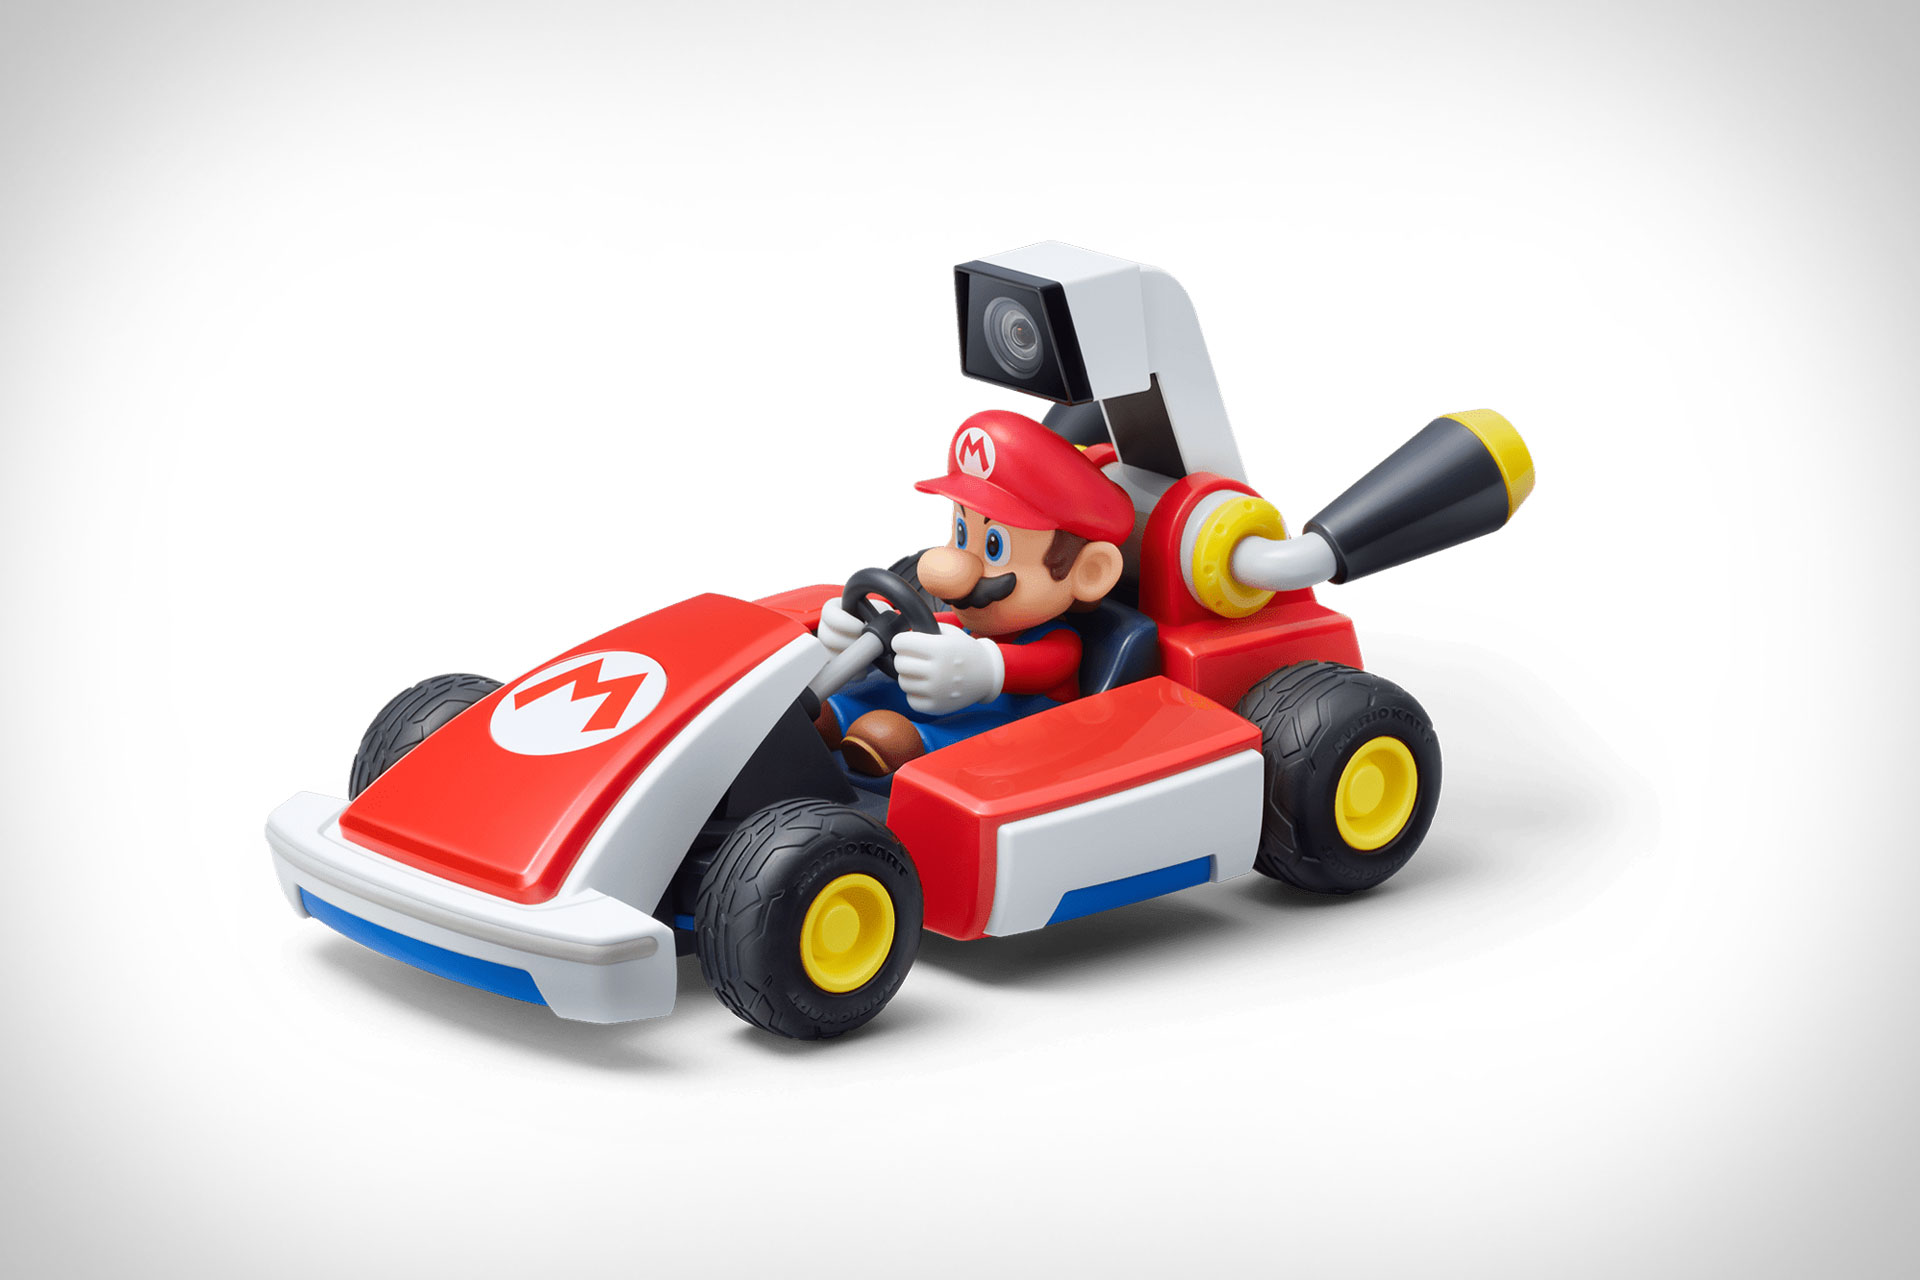 Nintendo Mario Kart Live: игра на домашней трассе